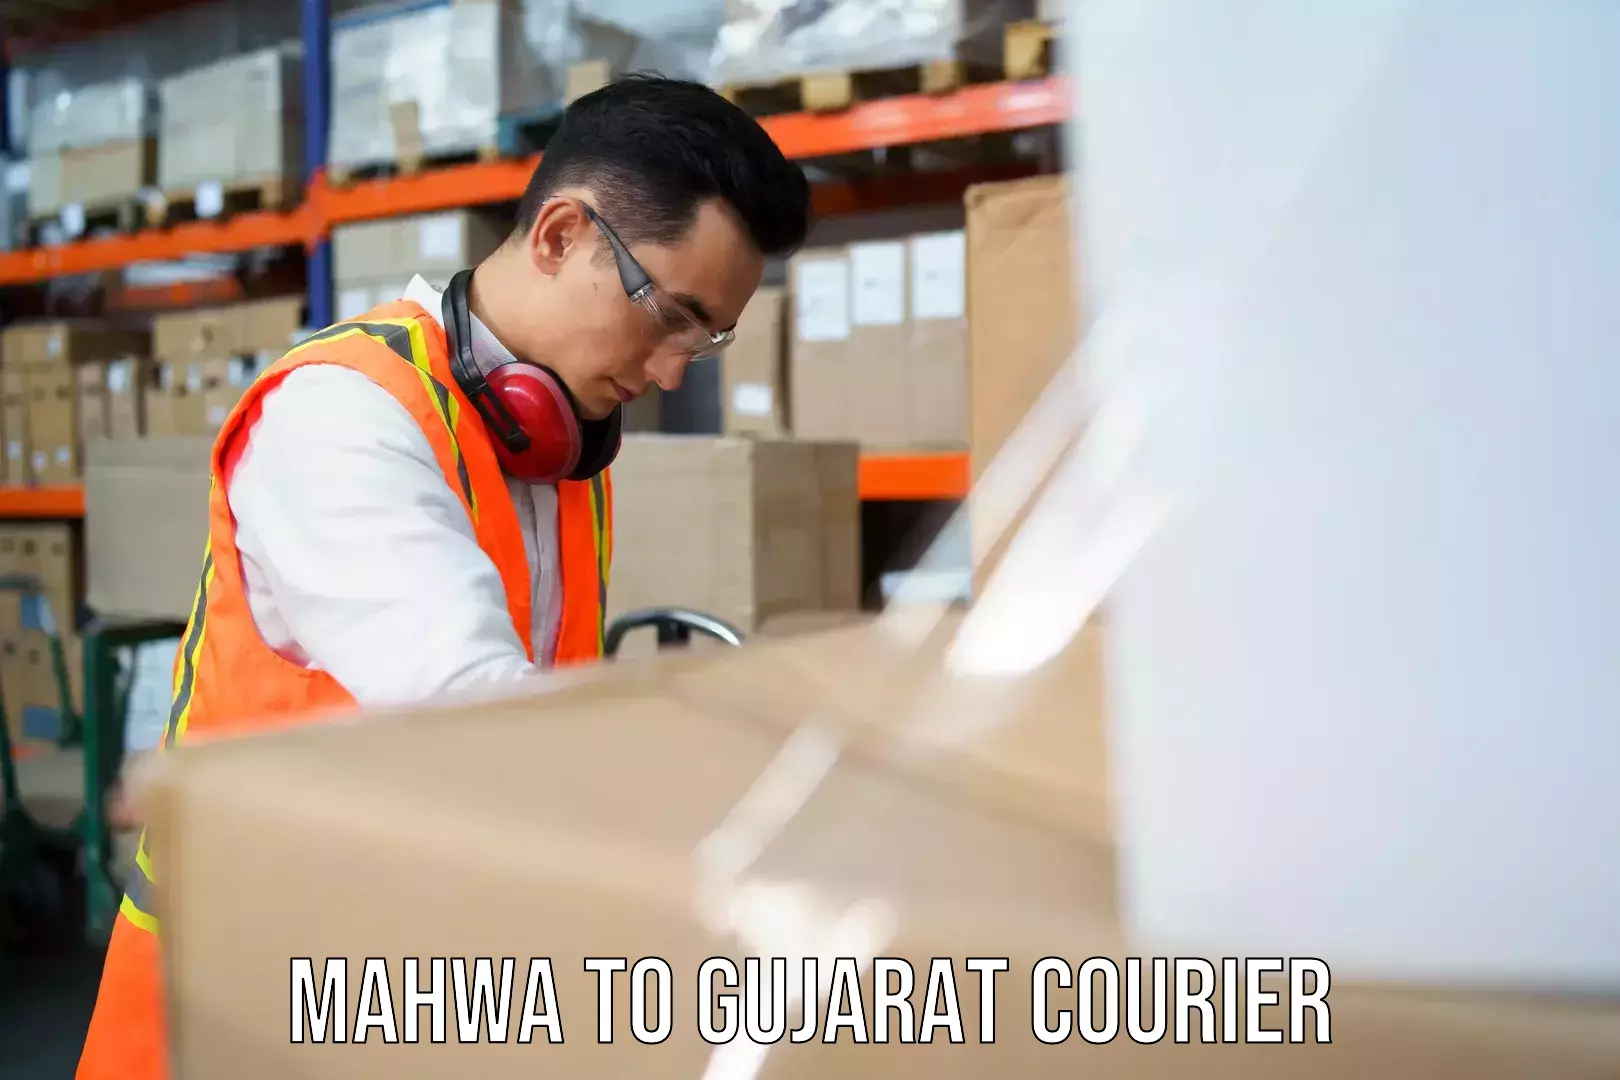 Efficient order fulfillment Mahwa to Gujarat